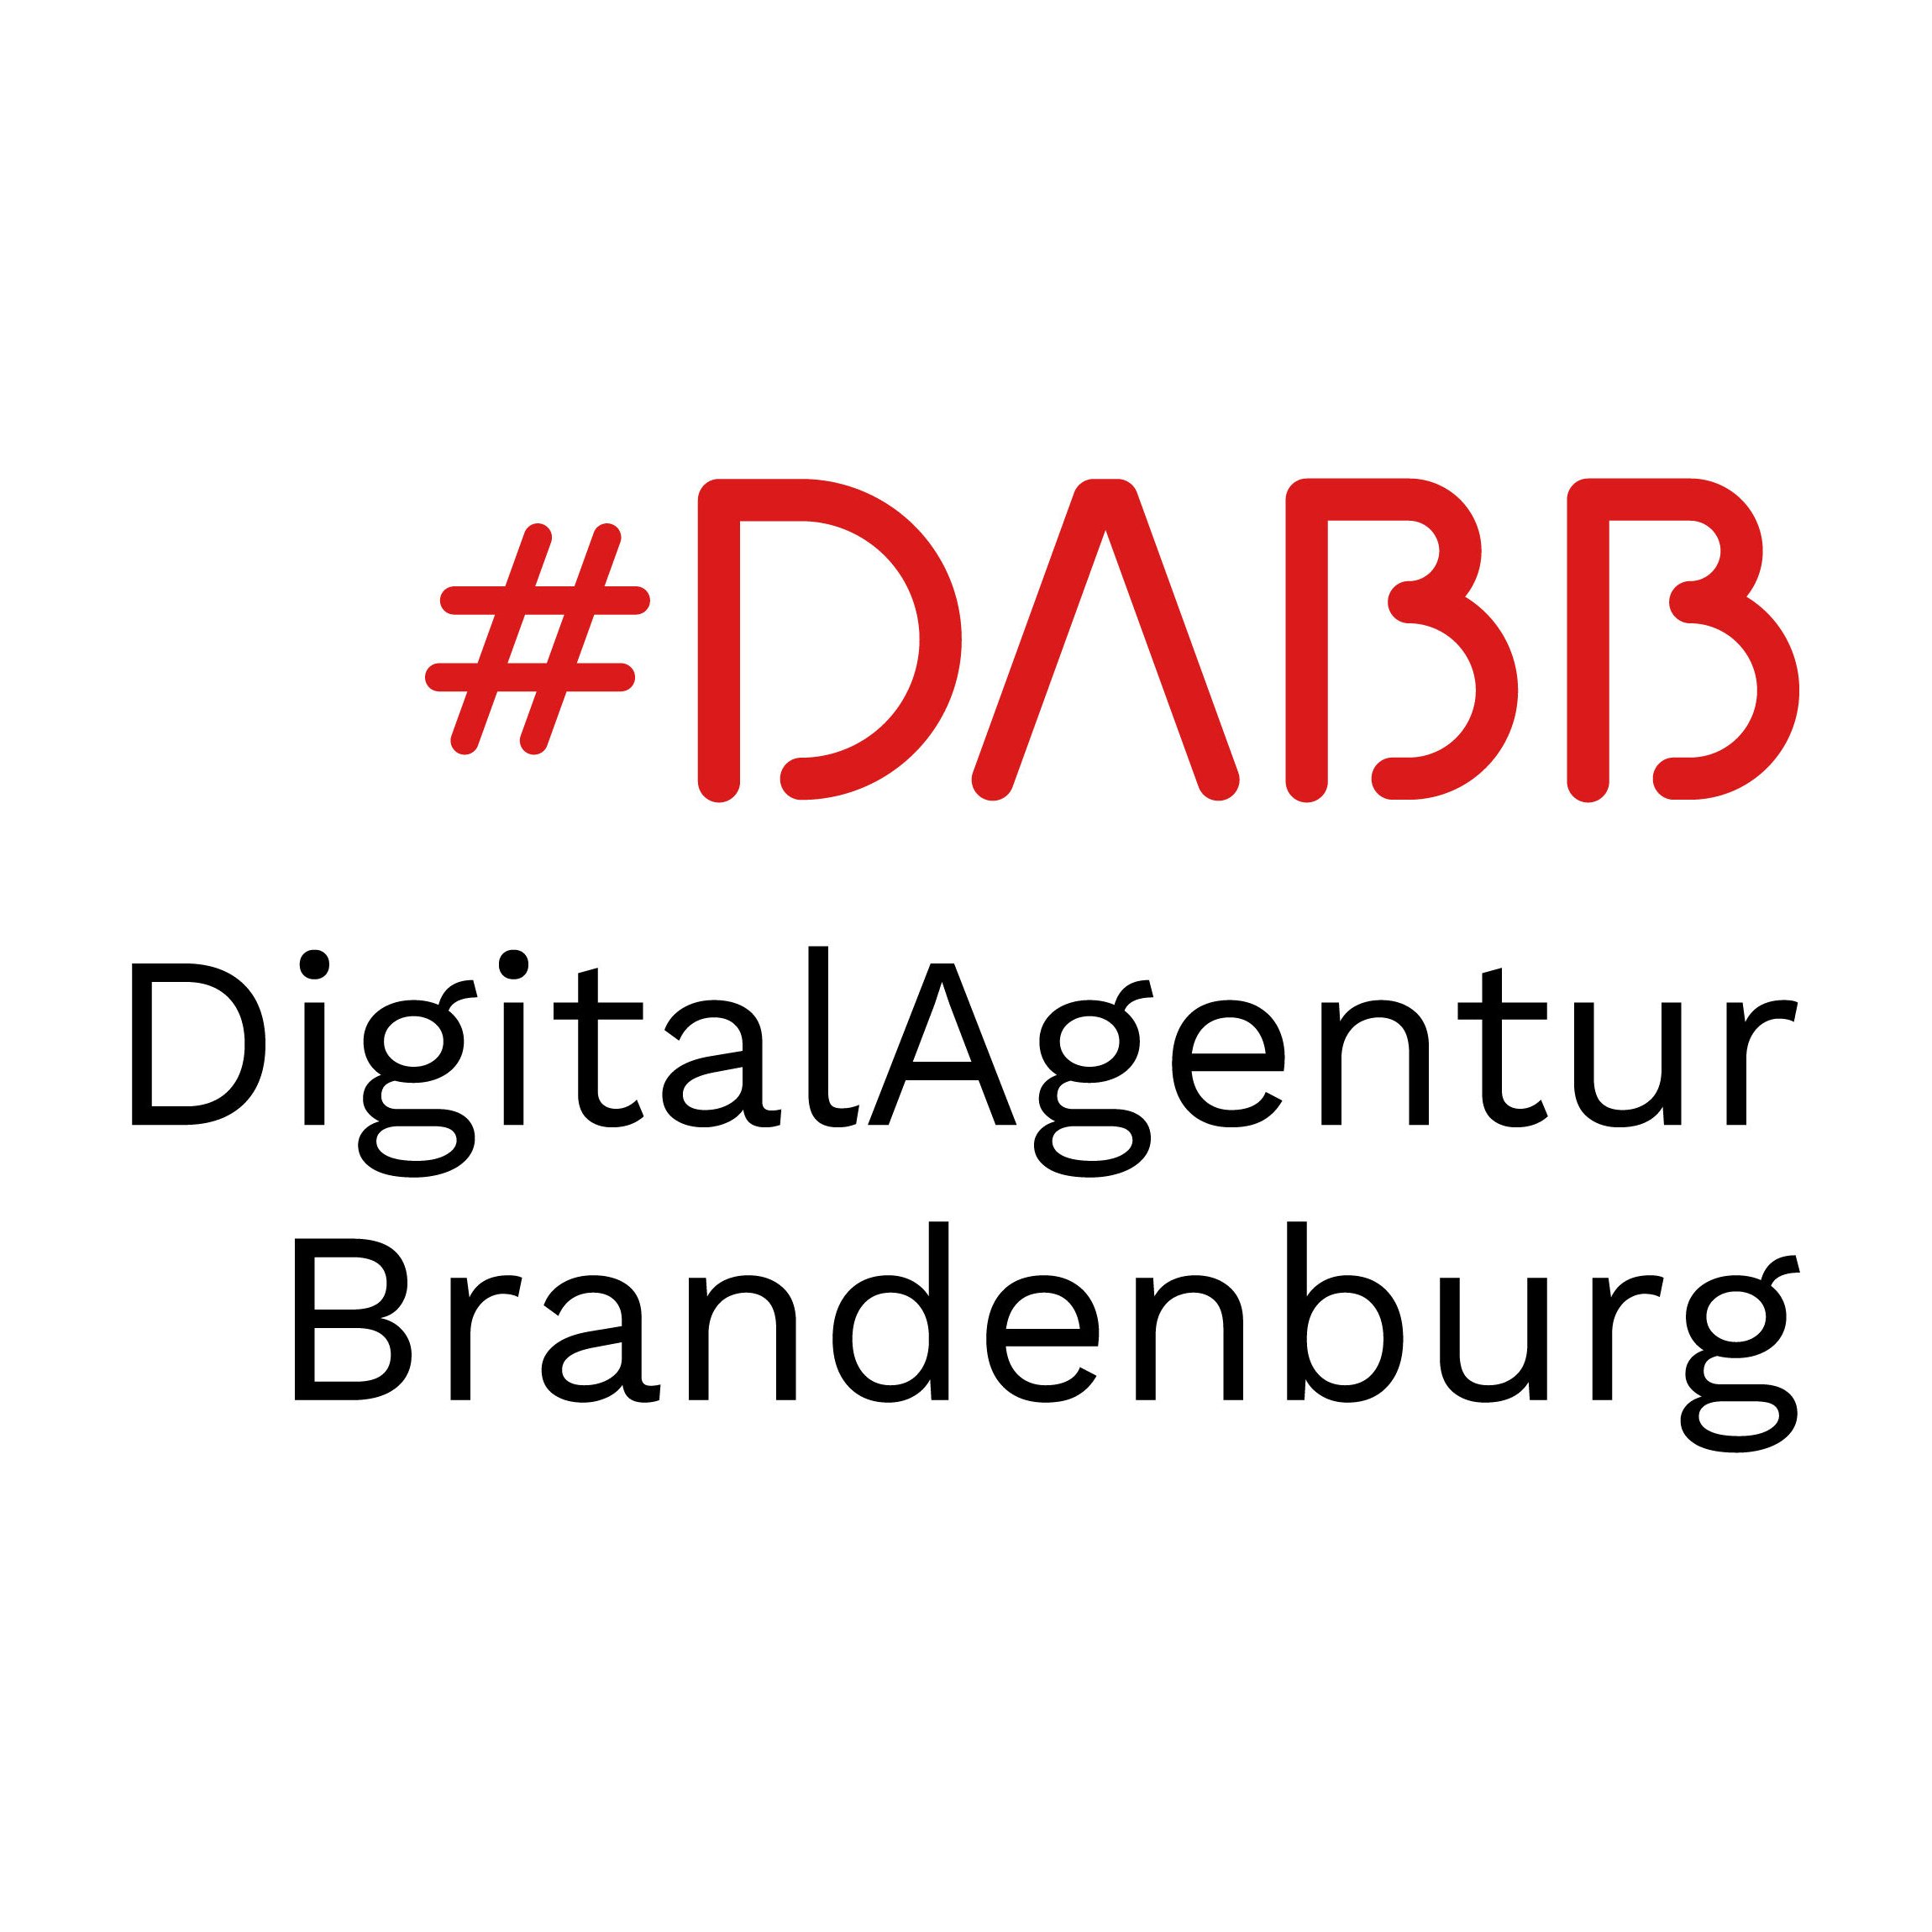 DABB-Logo-square.jpg